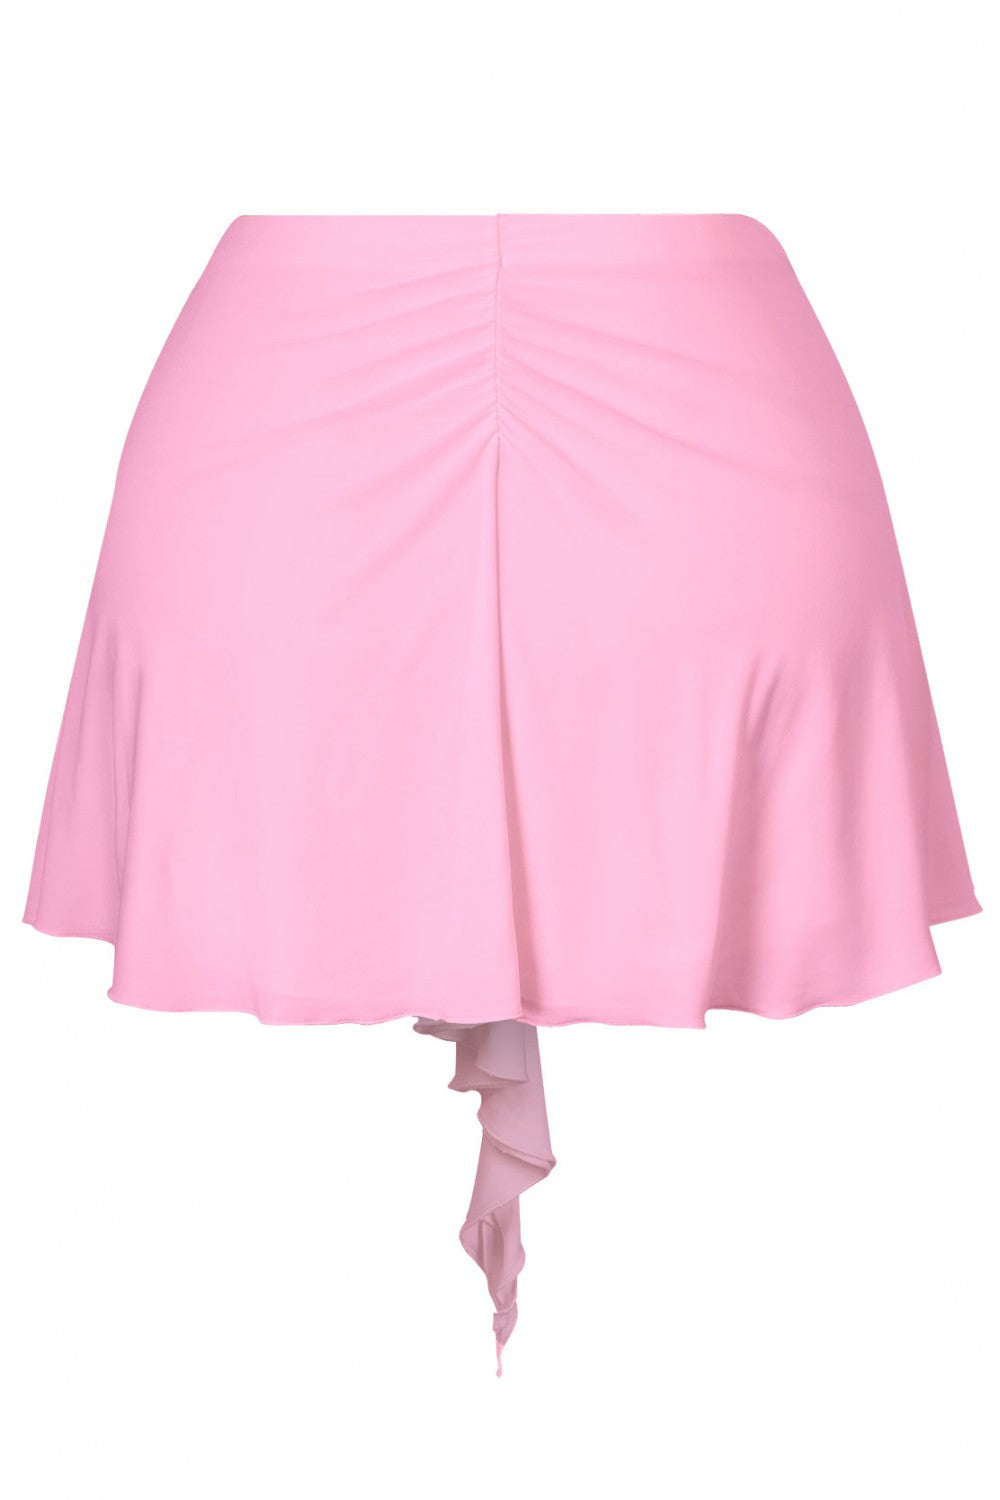 Business Talk Ruffled Hem Mini Skirt - Style Baby OMG Fashion Boutique - Stylebabyomg - Buy - Aesthetic Baddie Outfits - Babyboo - OOTD - Shie 